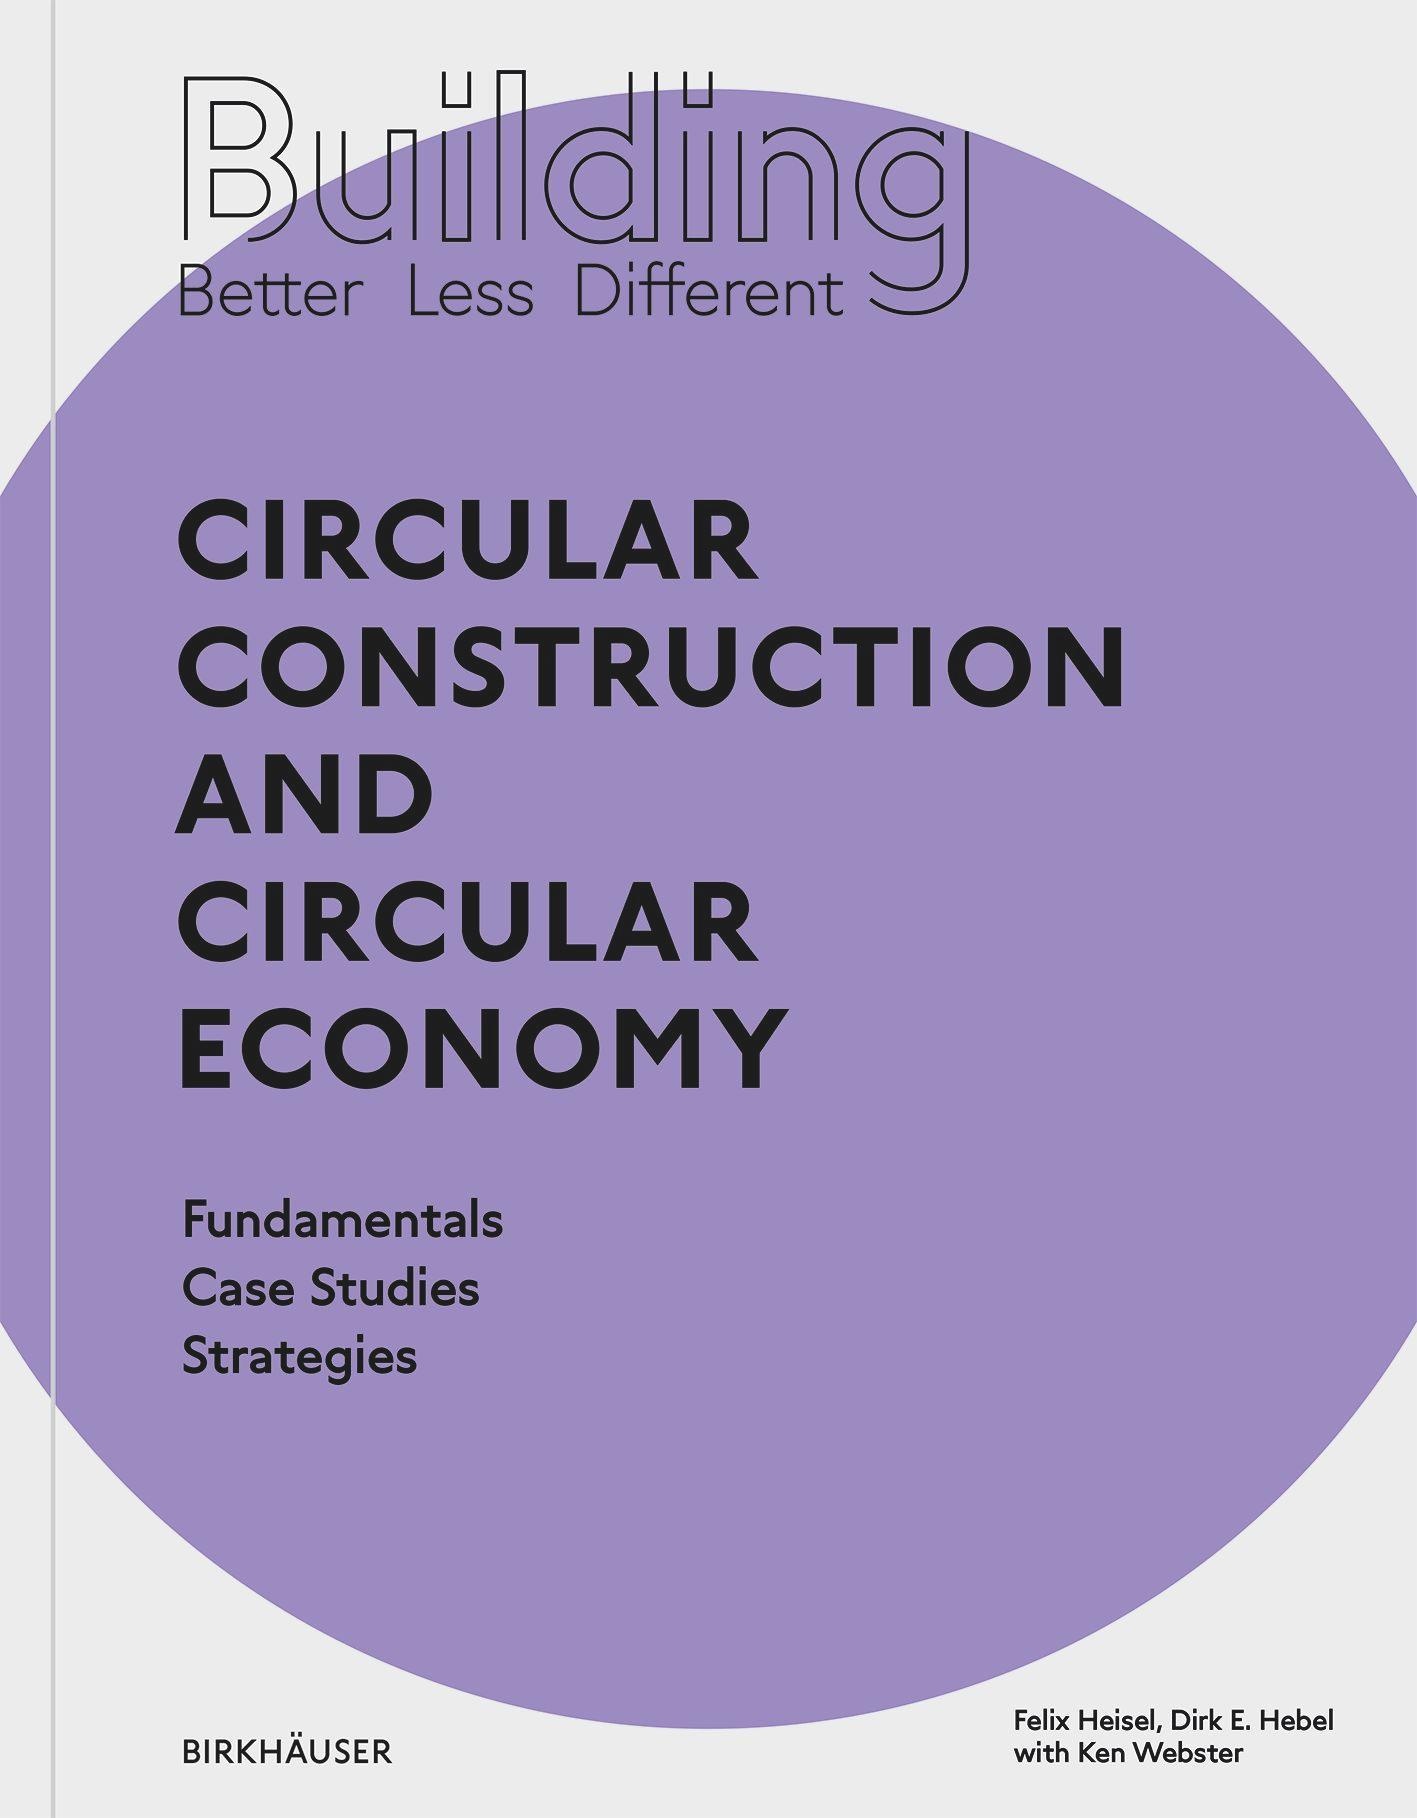 Building Better - Less - Different: Circular Construction And Circular Economy - Felix Heisel  Dirk E. Hebel